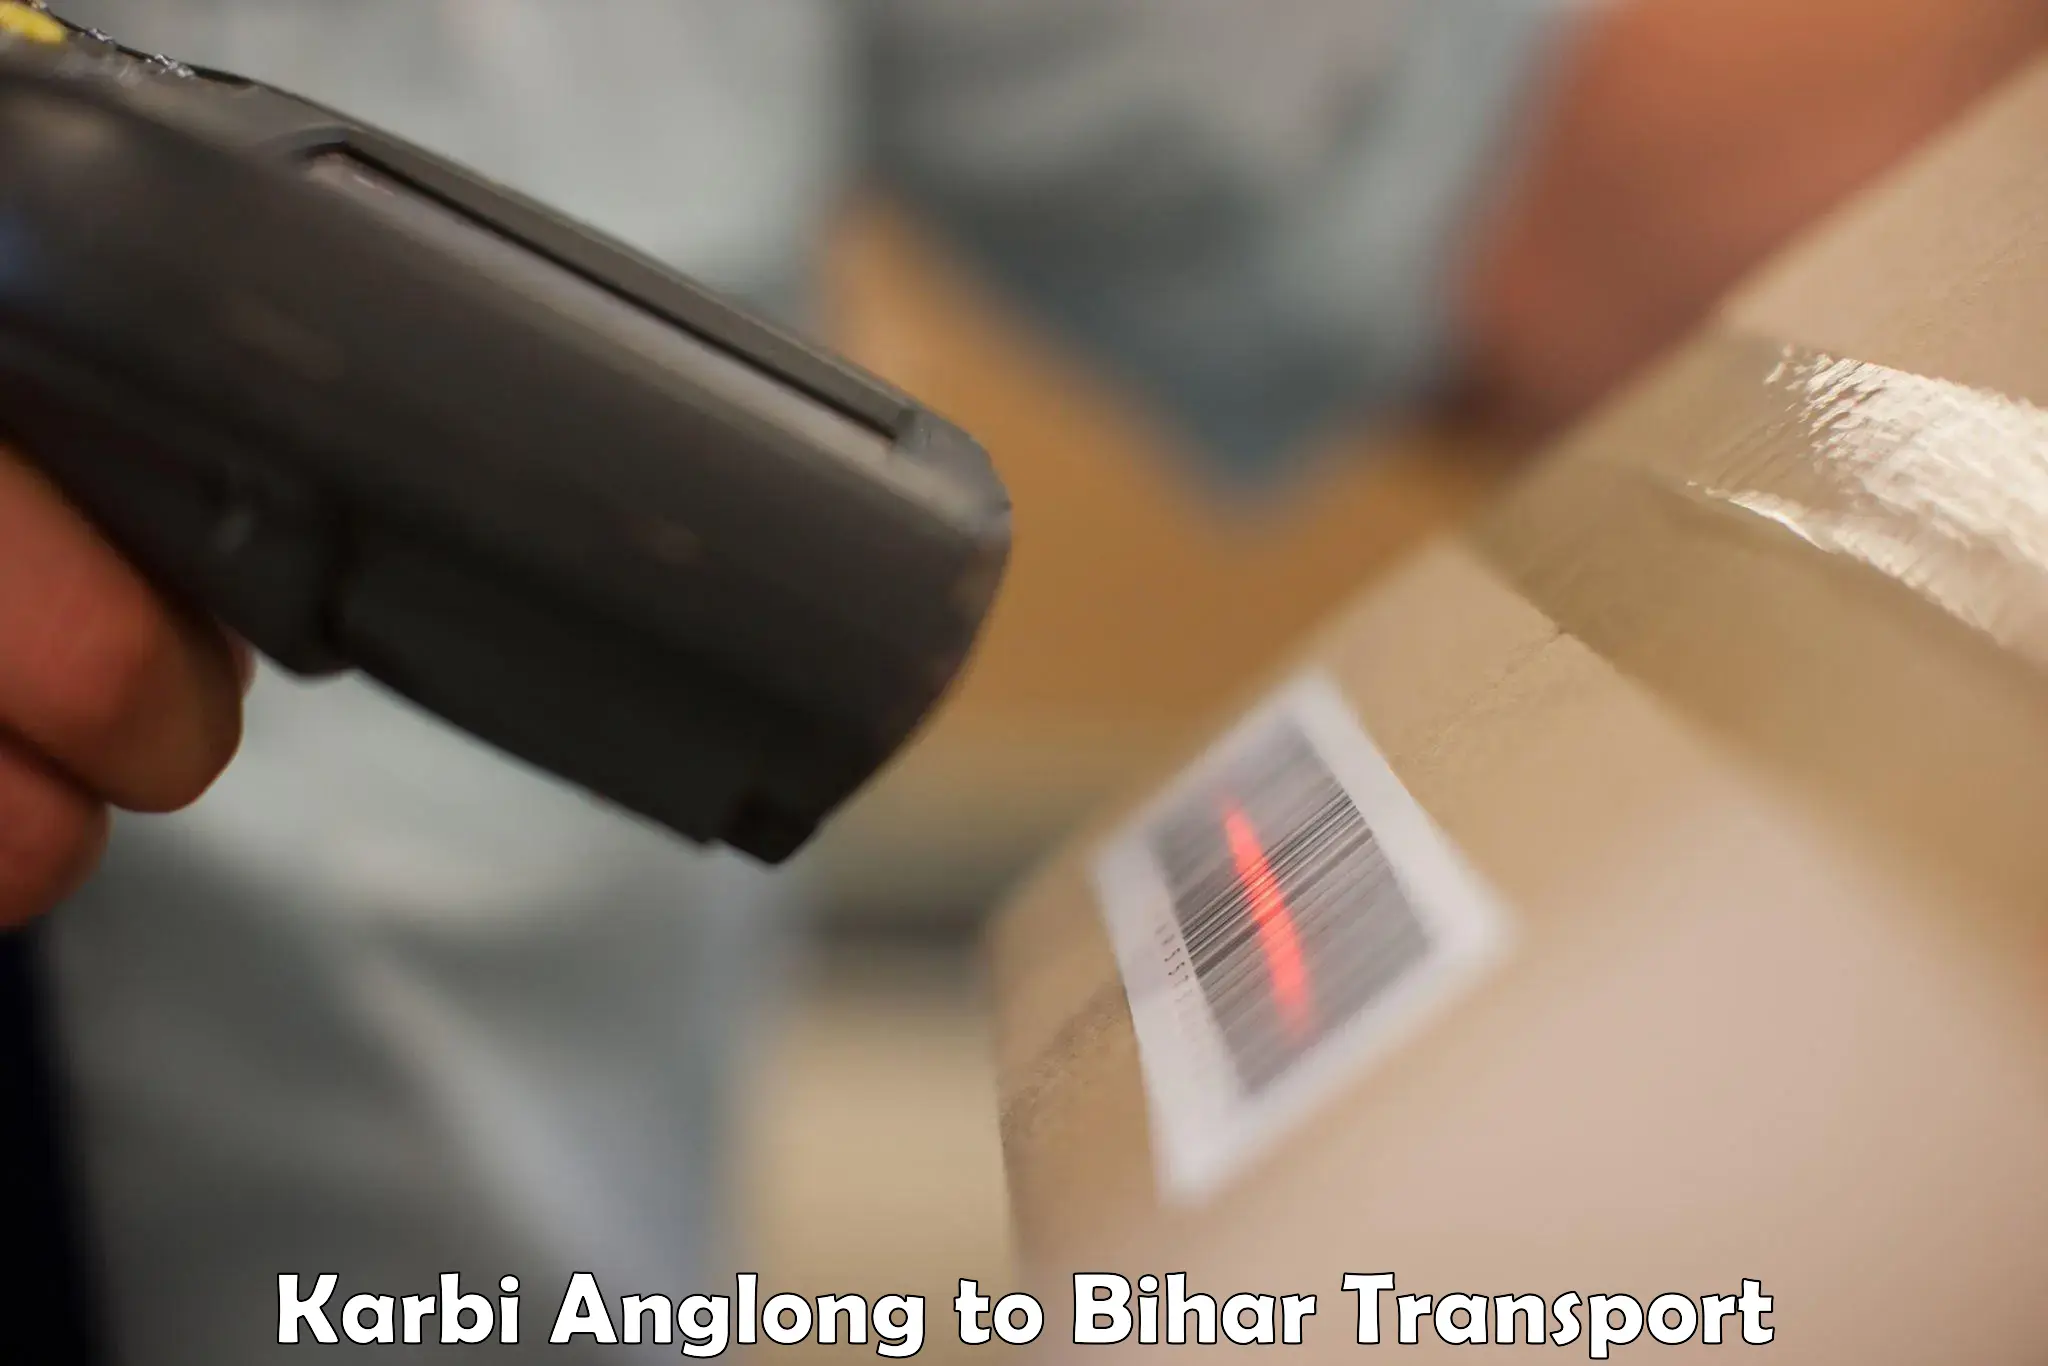 Shipping partner Karbi Anglong to Maheshkhunt